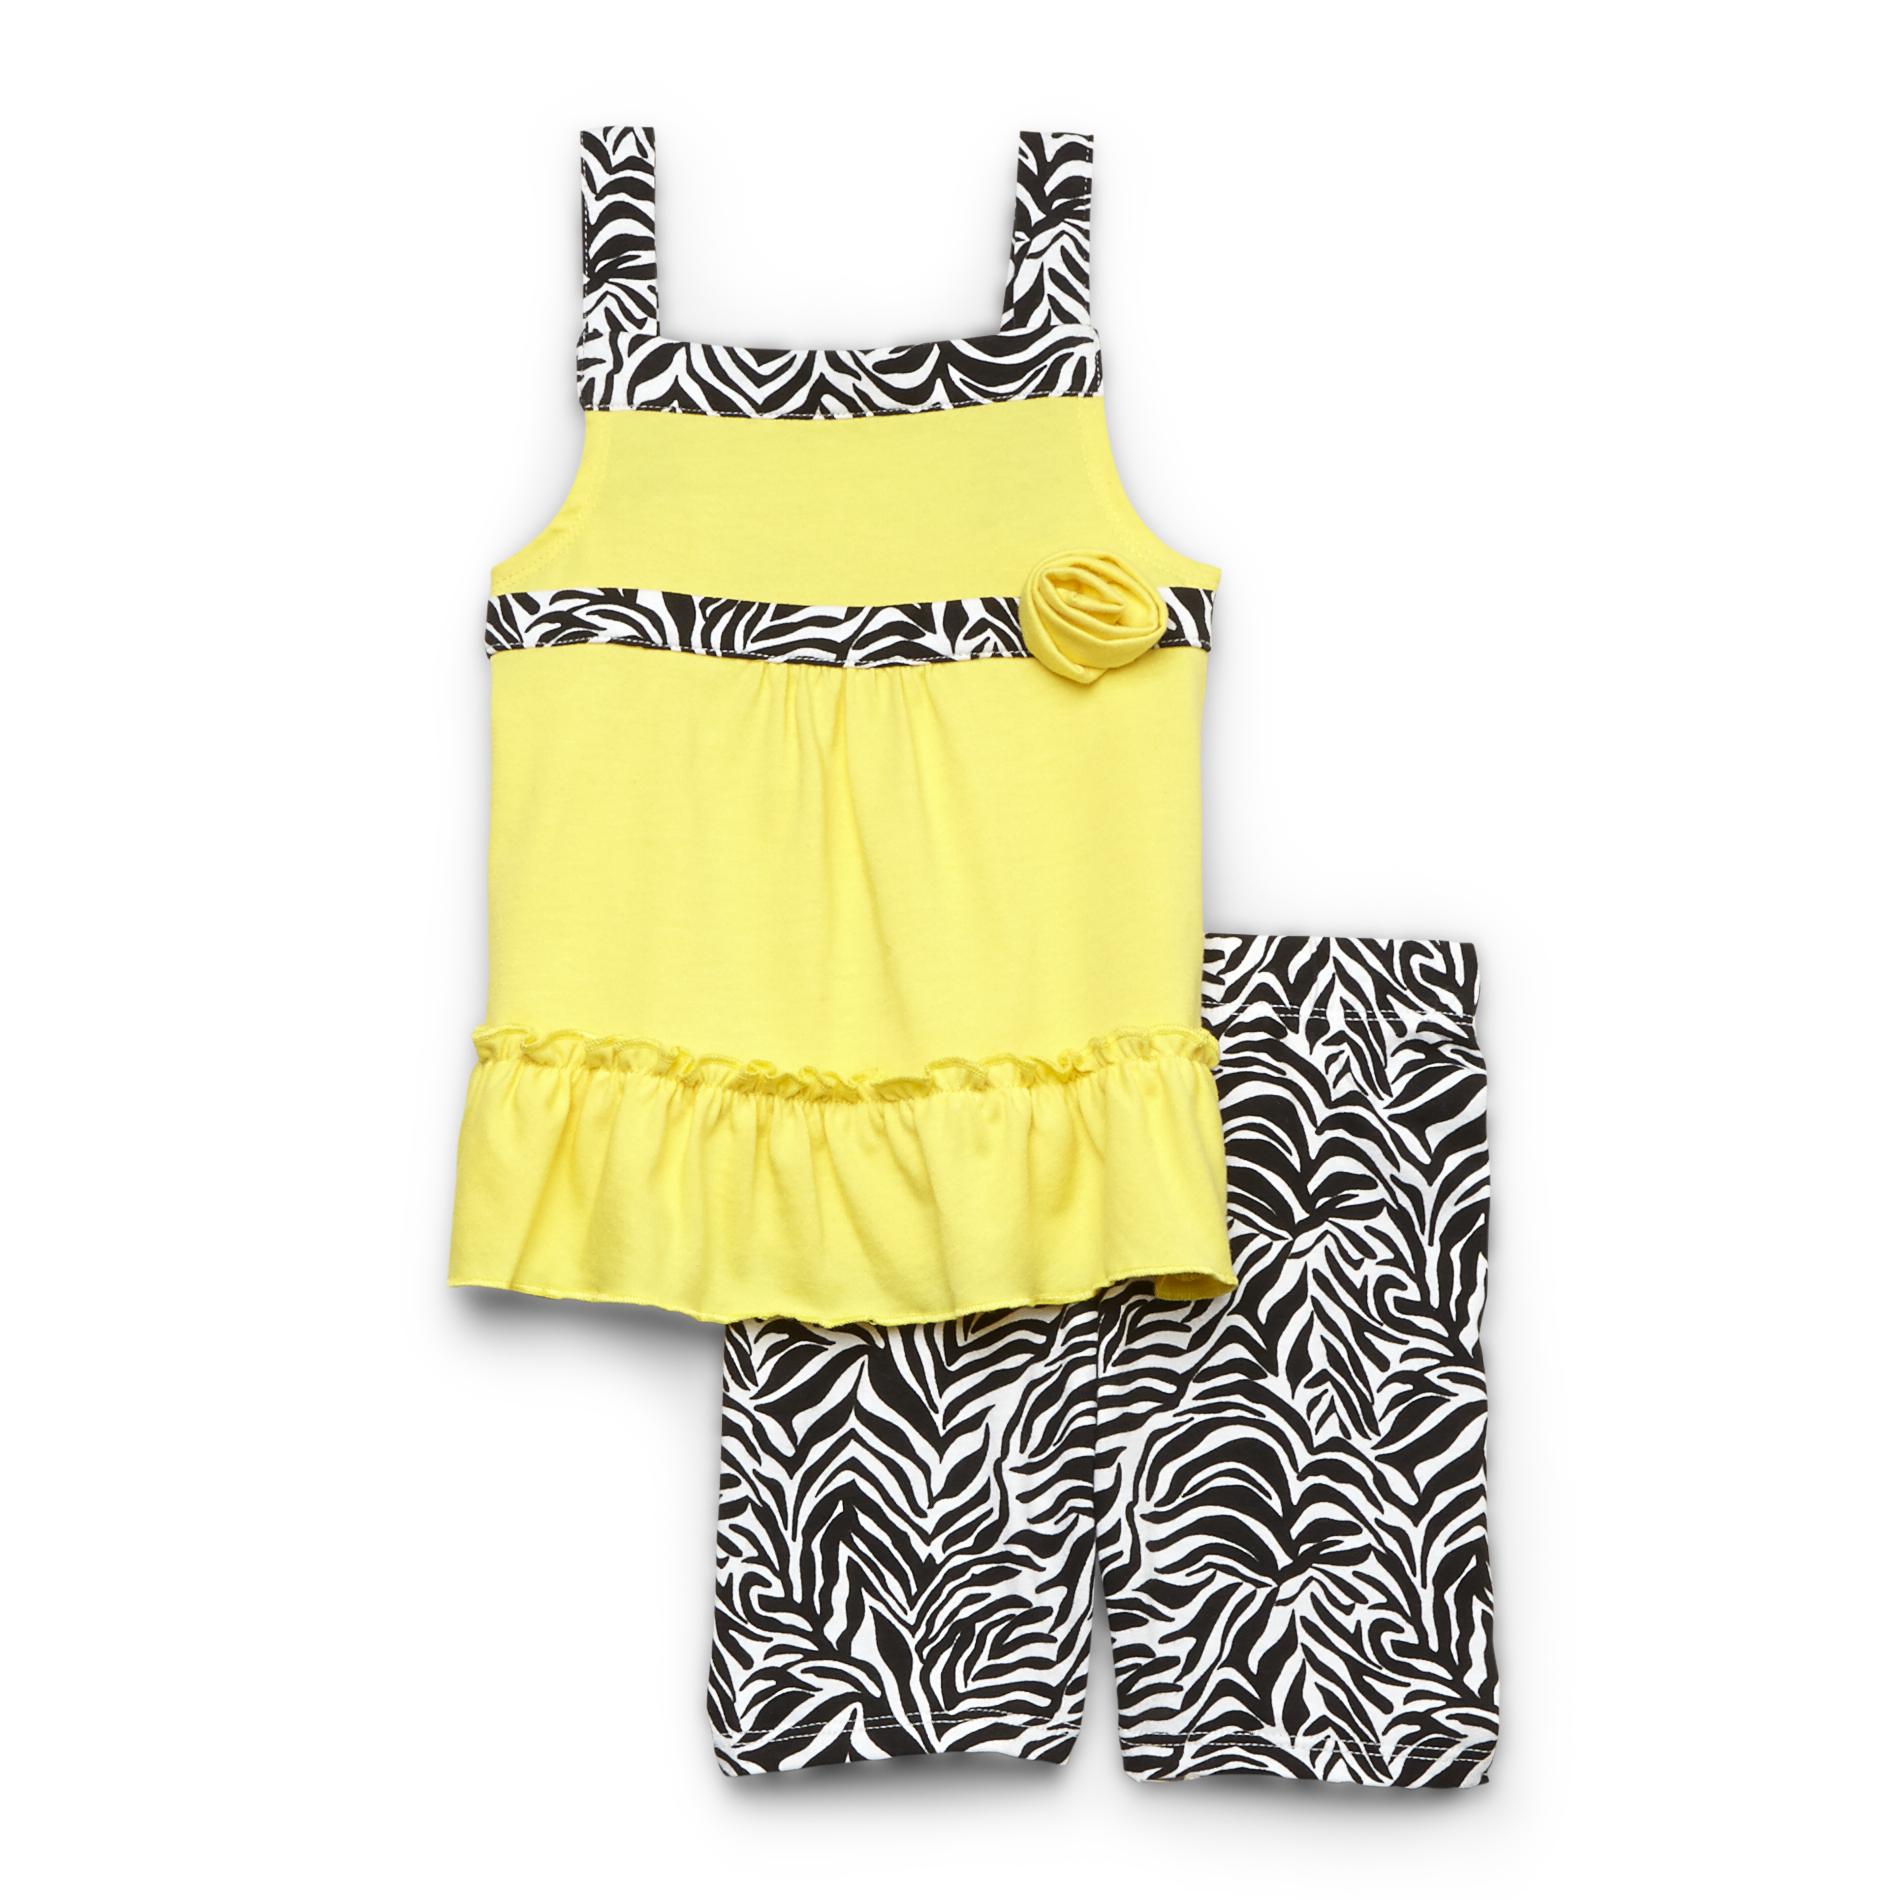 WonderKids Infant & Toddler Girl's Tank Top & Shorts - Zebra Print